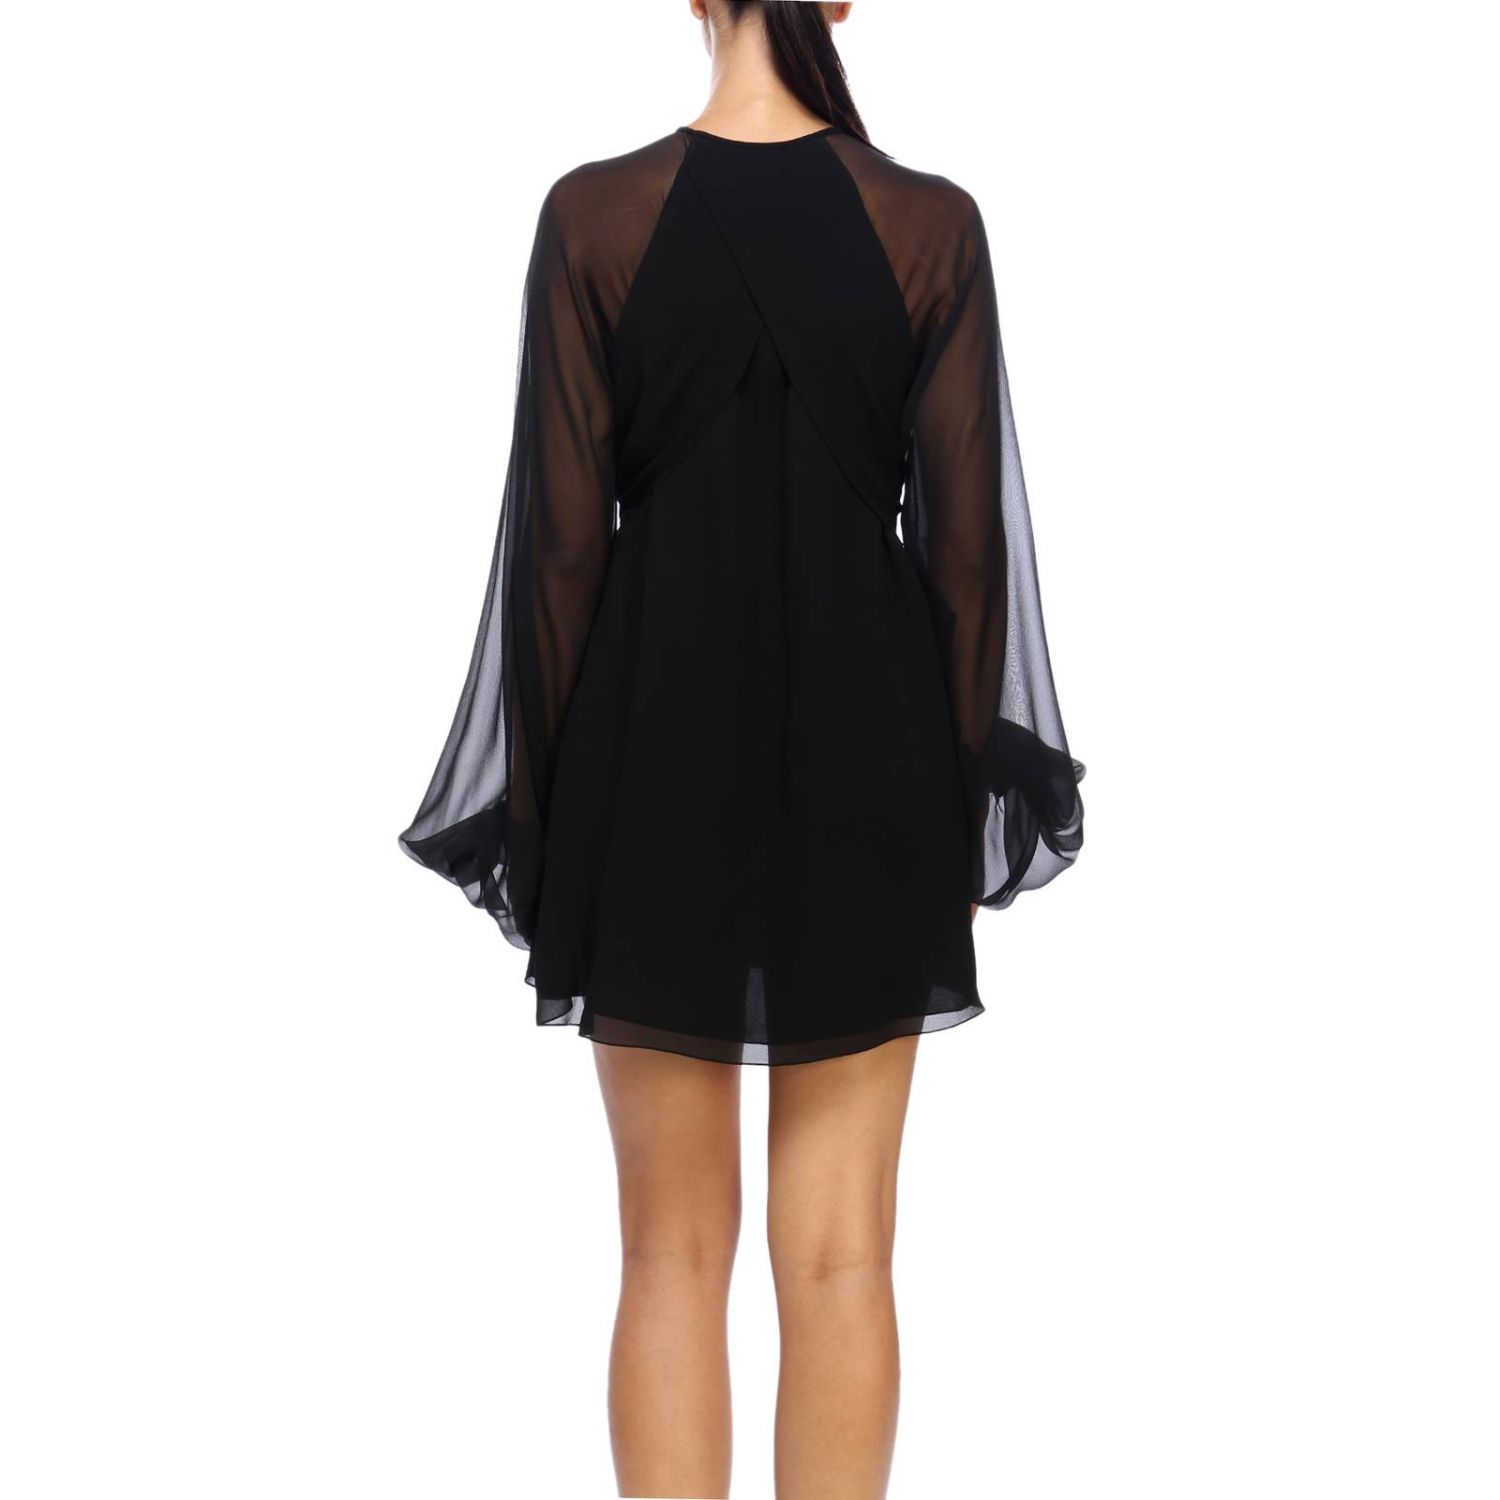 SAINT LAURENT: Dress women | Dress Saint Laurent Women Black | Dress